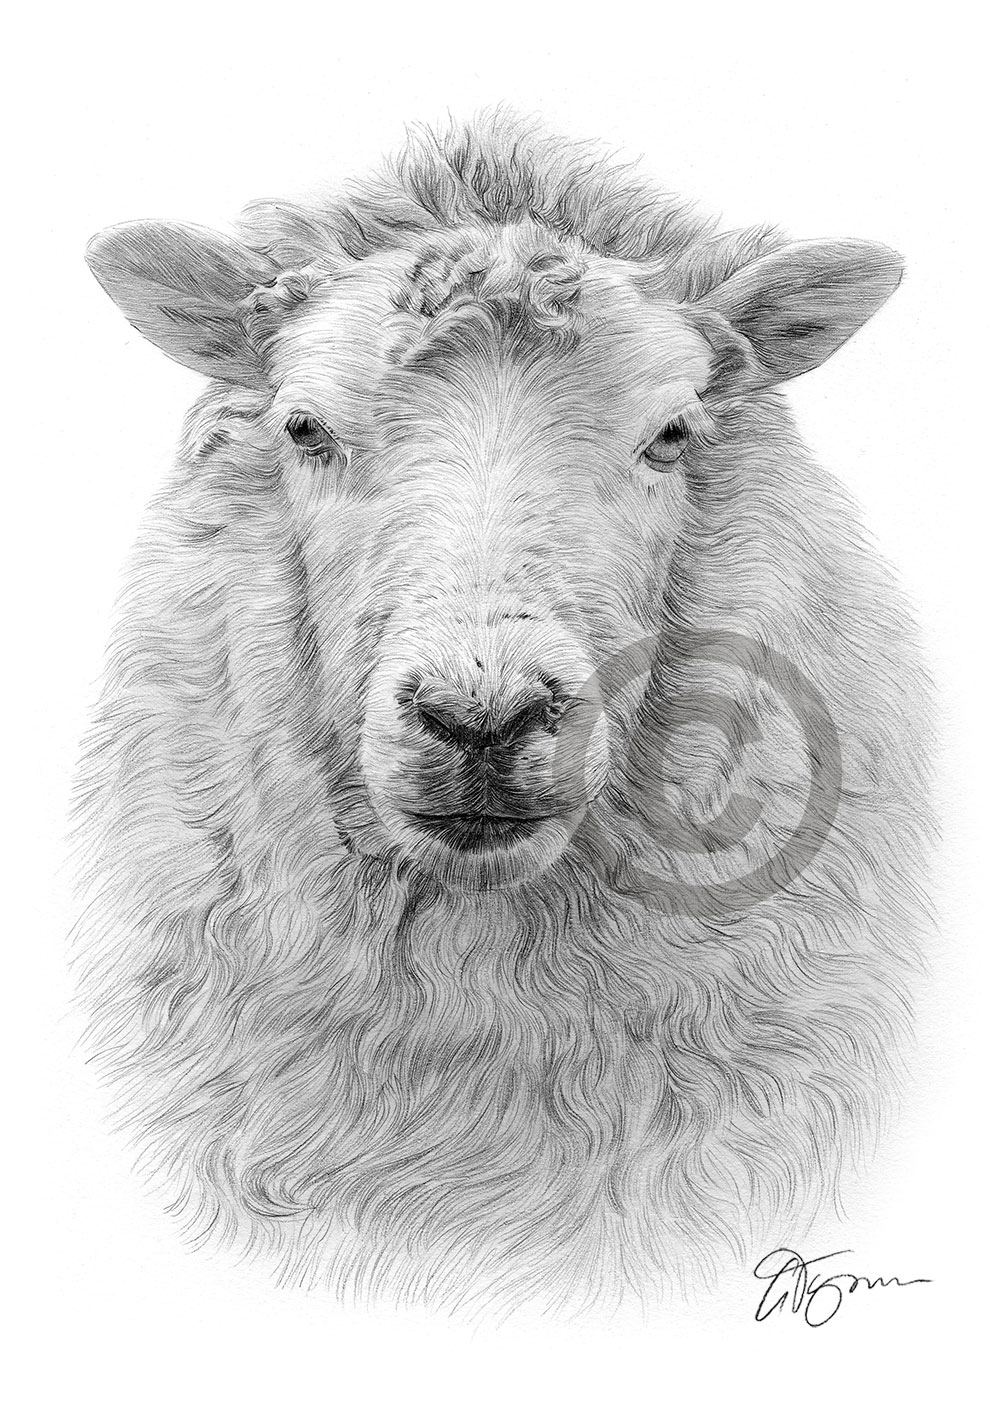 Pencil drawing of a sheep by UK artist Gary Tymon